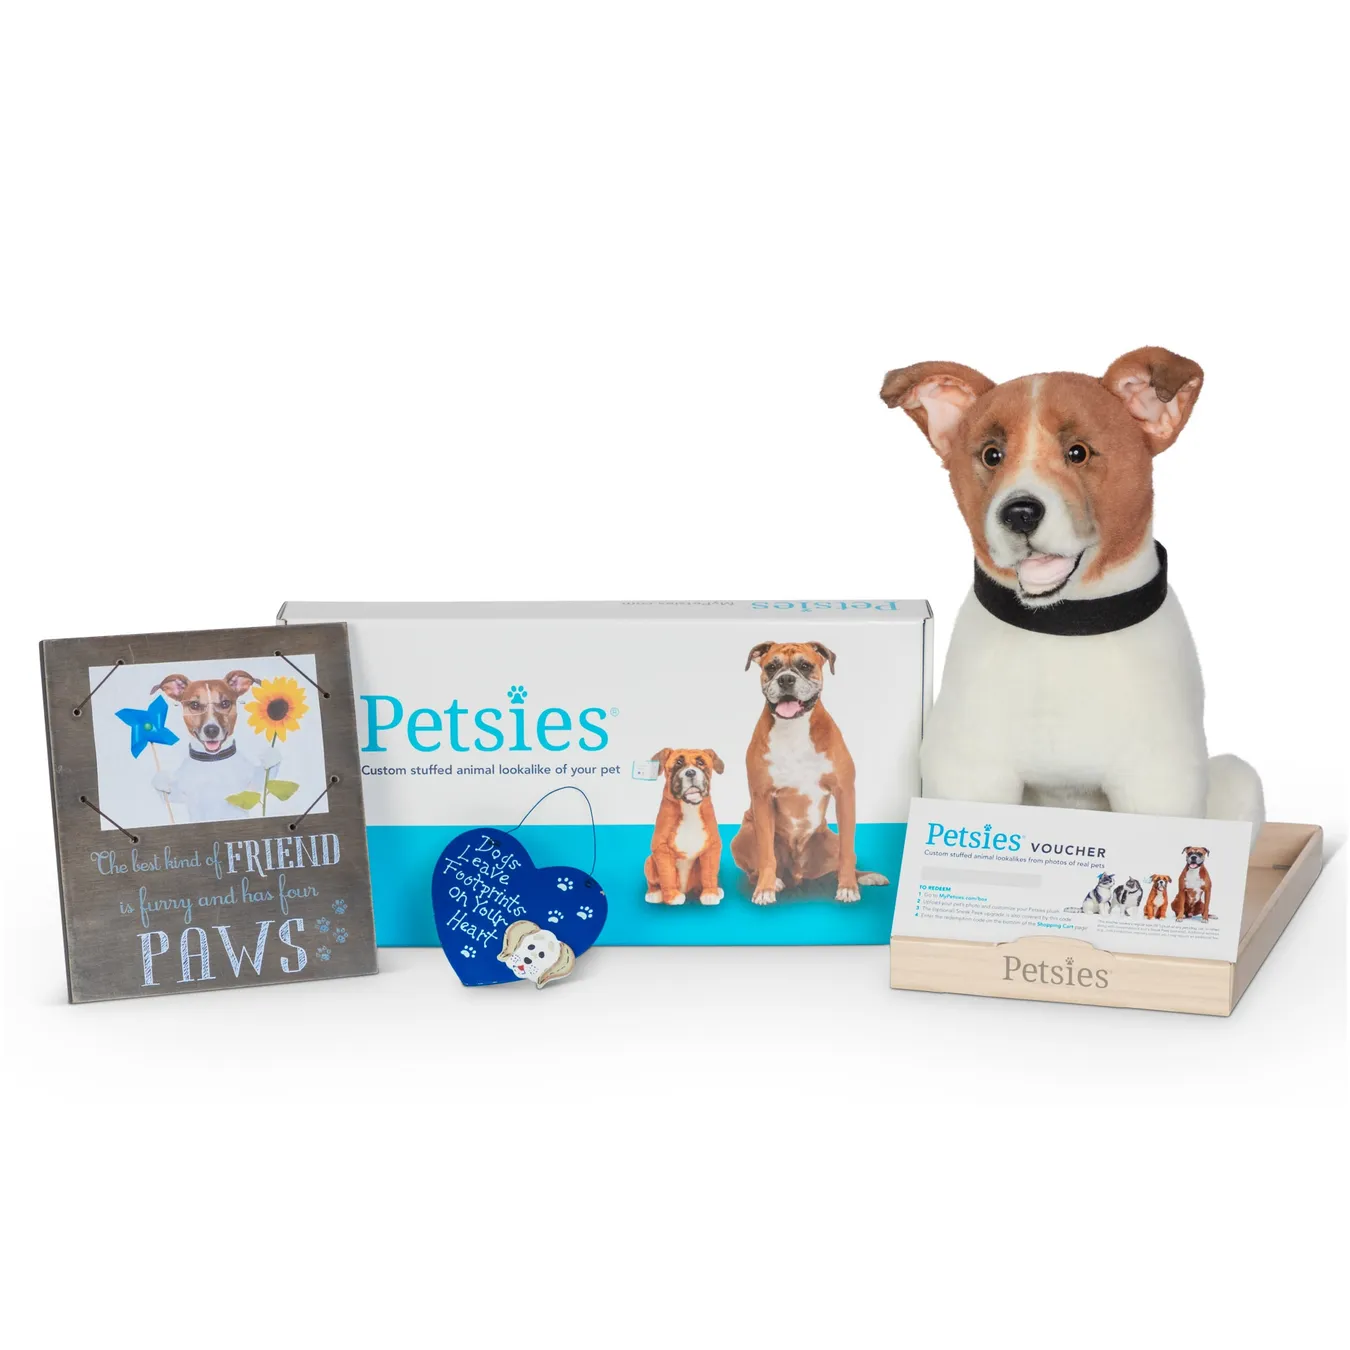 Petsies Creates Custom Stuffed Animal Versions of Your Pet